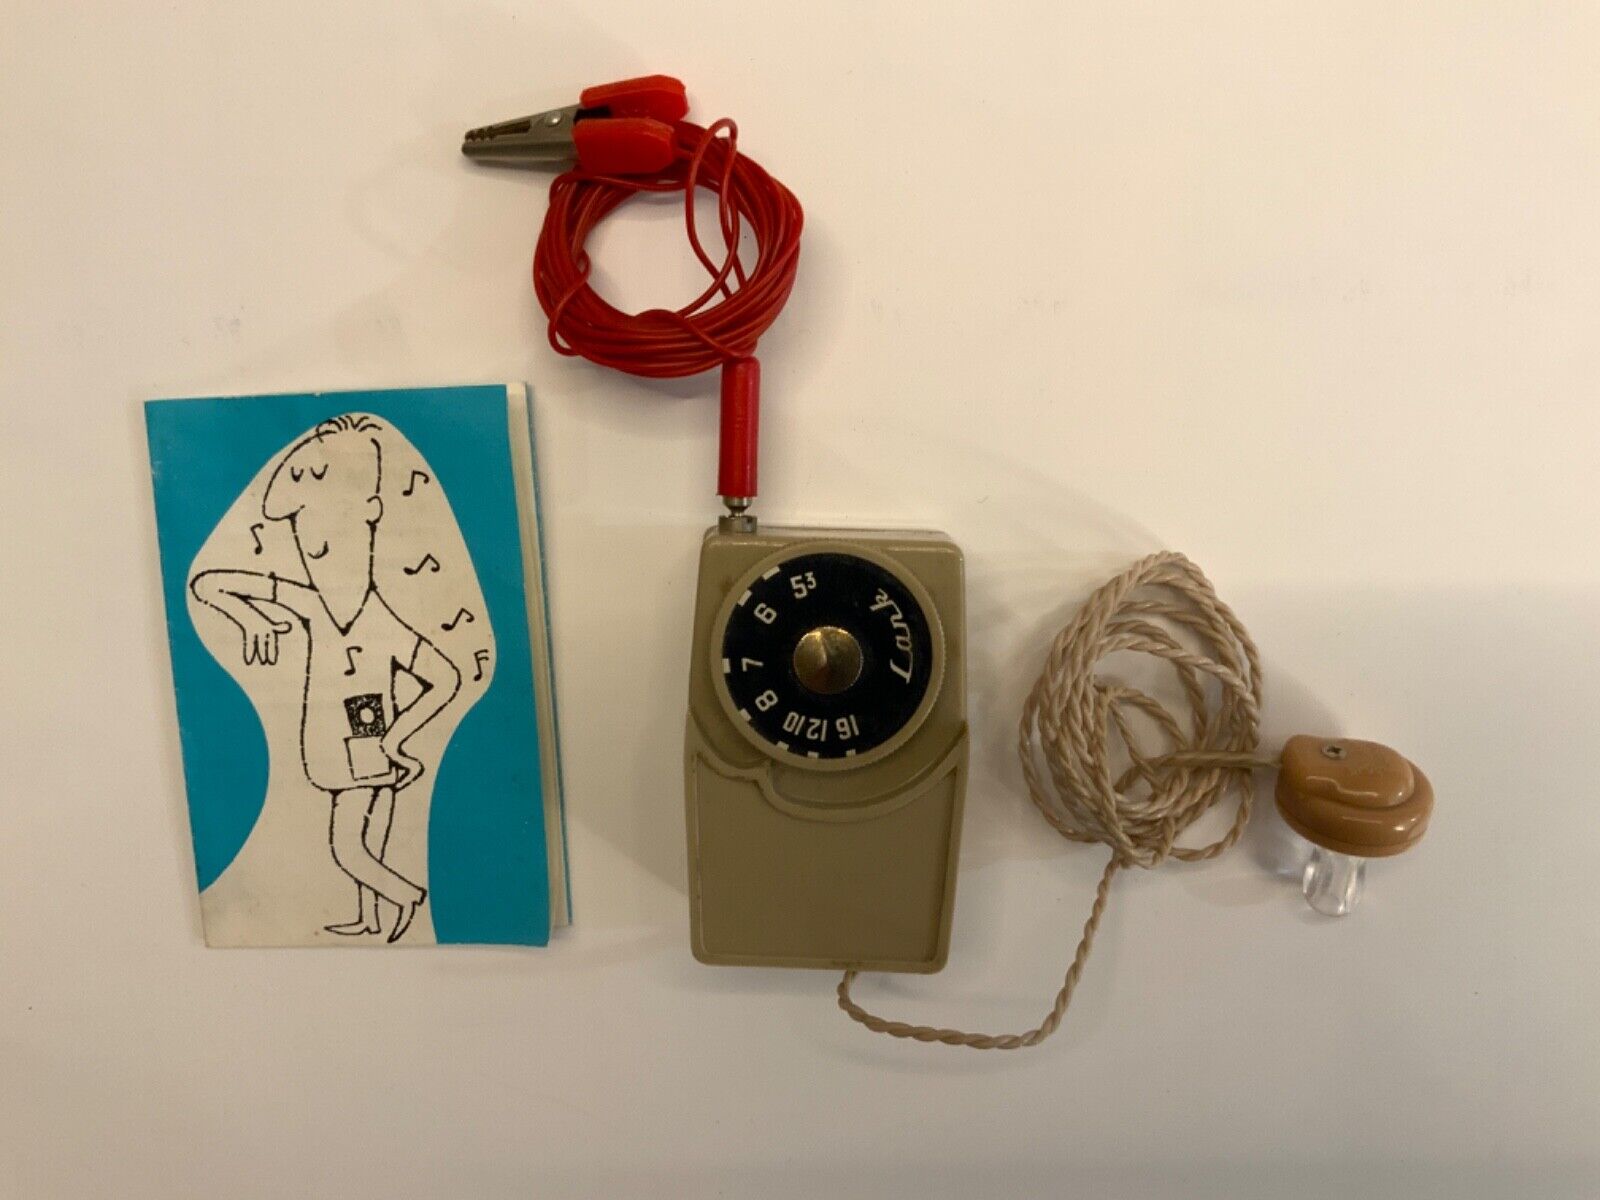 Lark Germanium Radio Model MG-12 Miniature Radio with Instructions circa 1958